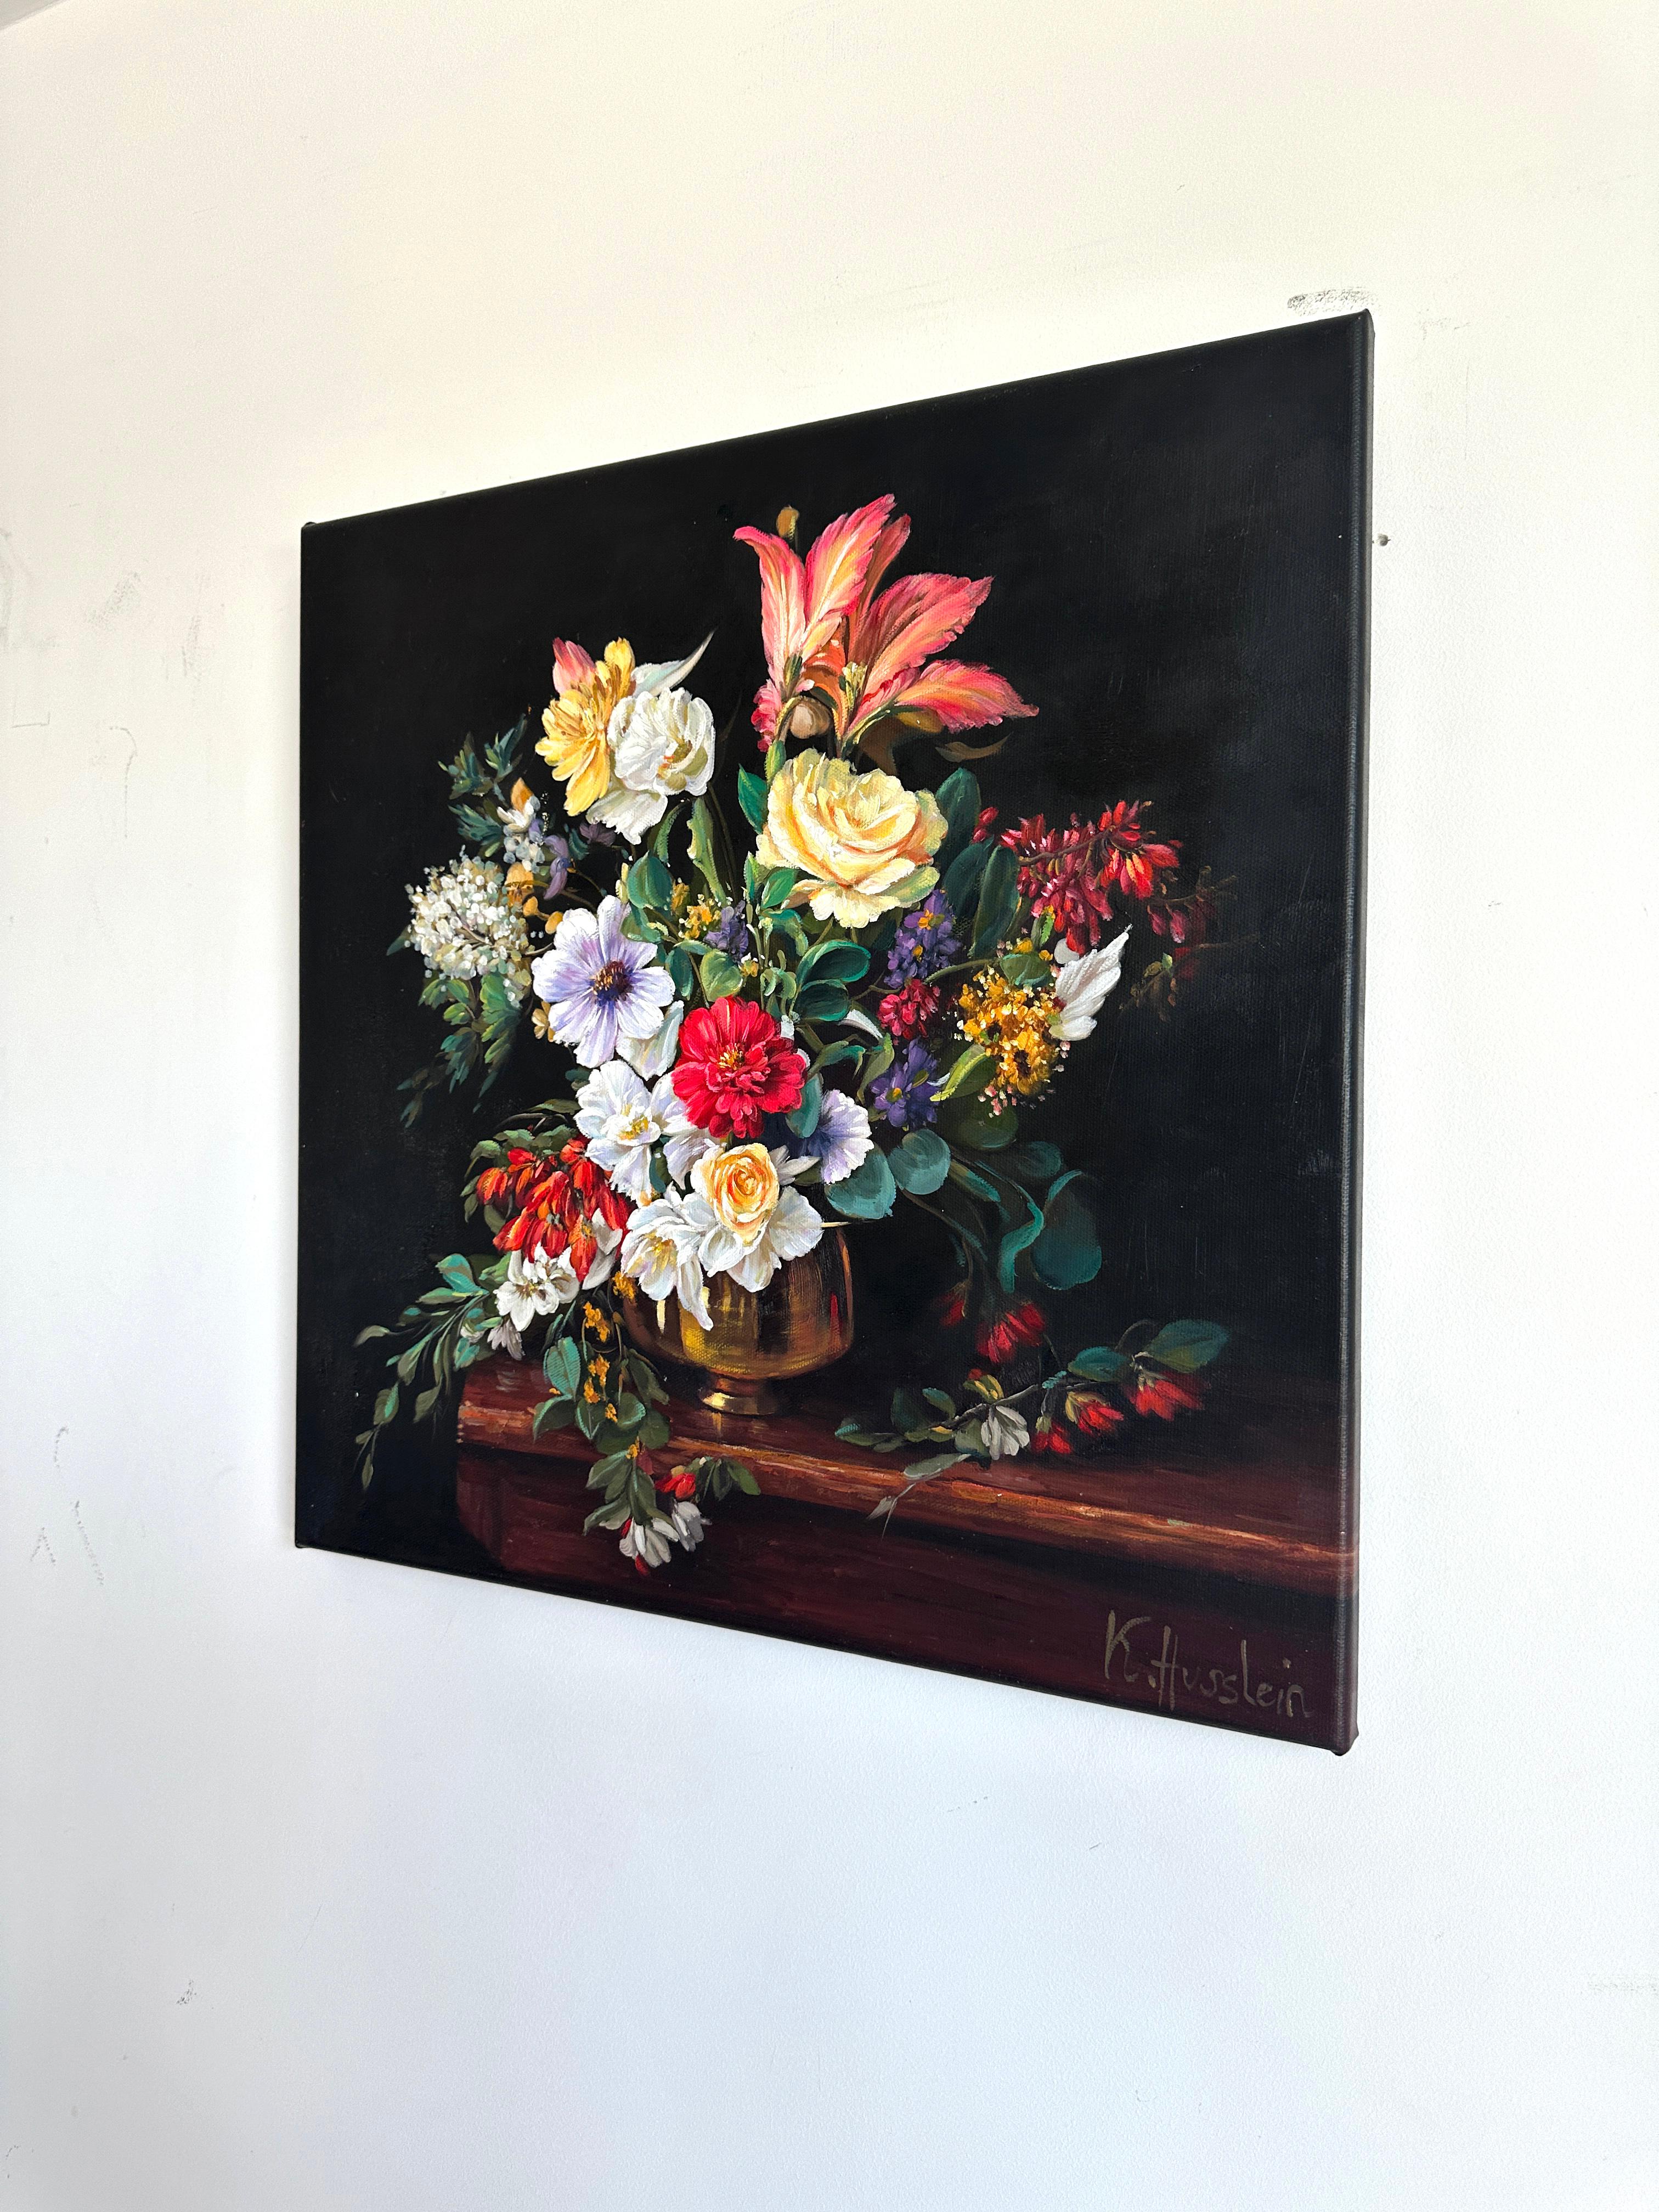 Heart over Head - Katharina Husslein Contemporary Flower Still life Oil Painting 3